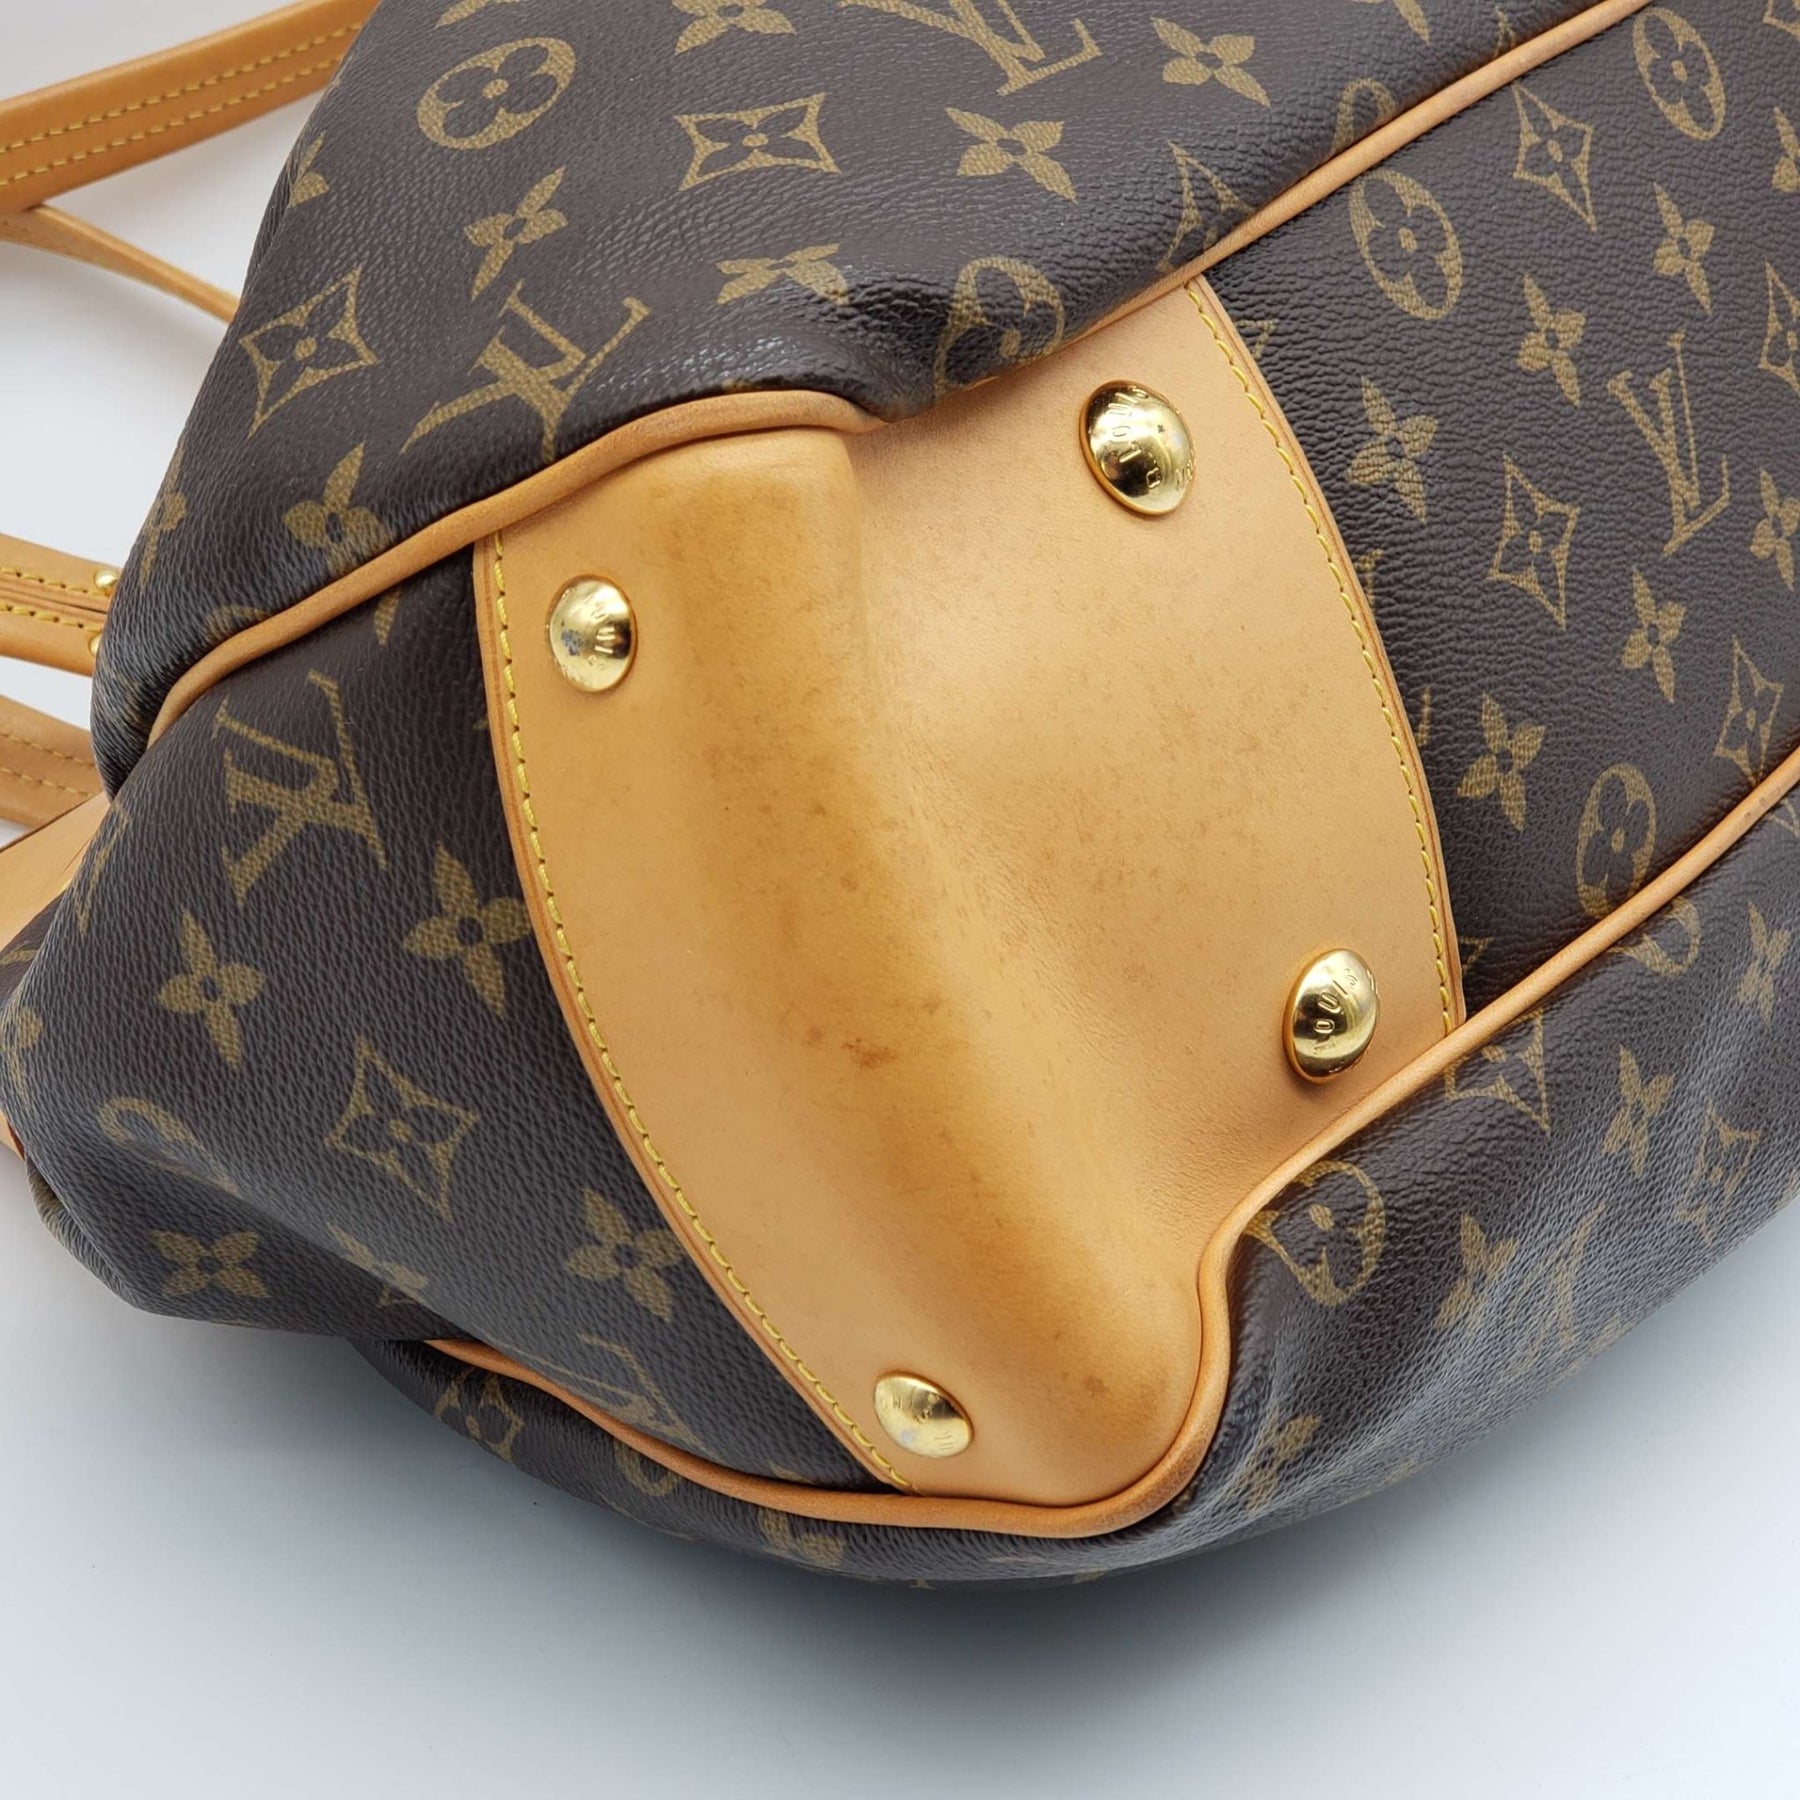 Handbags Louis Vuitton LV Boetie mm Tote Bag